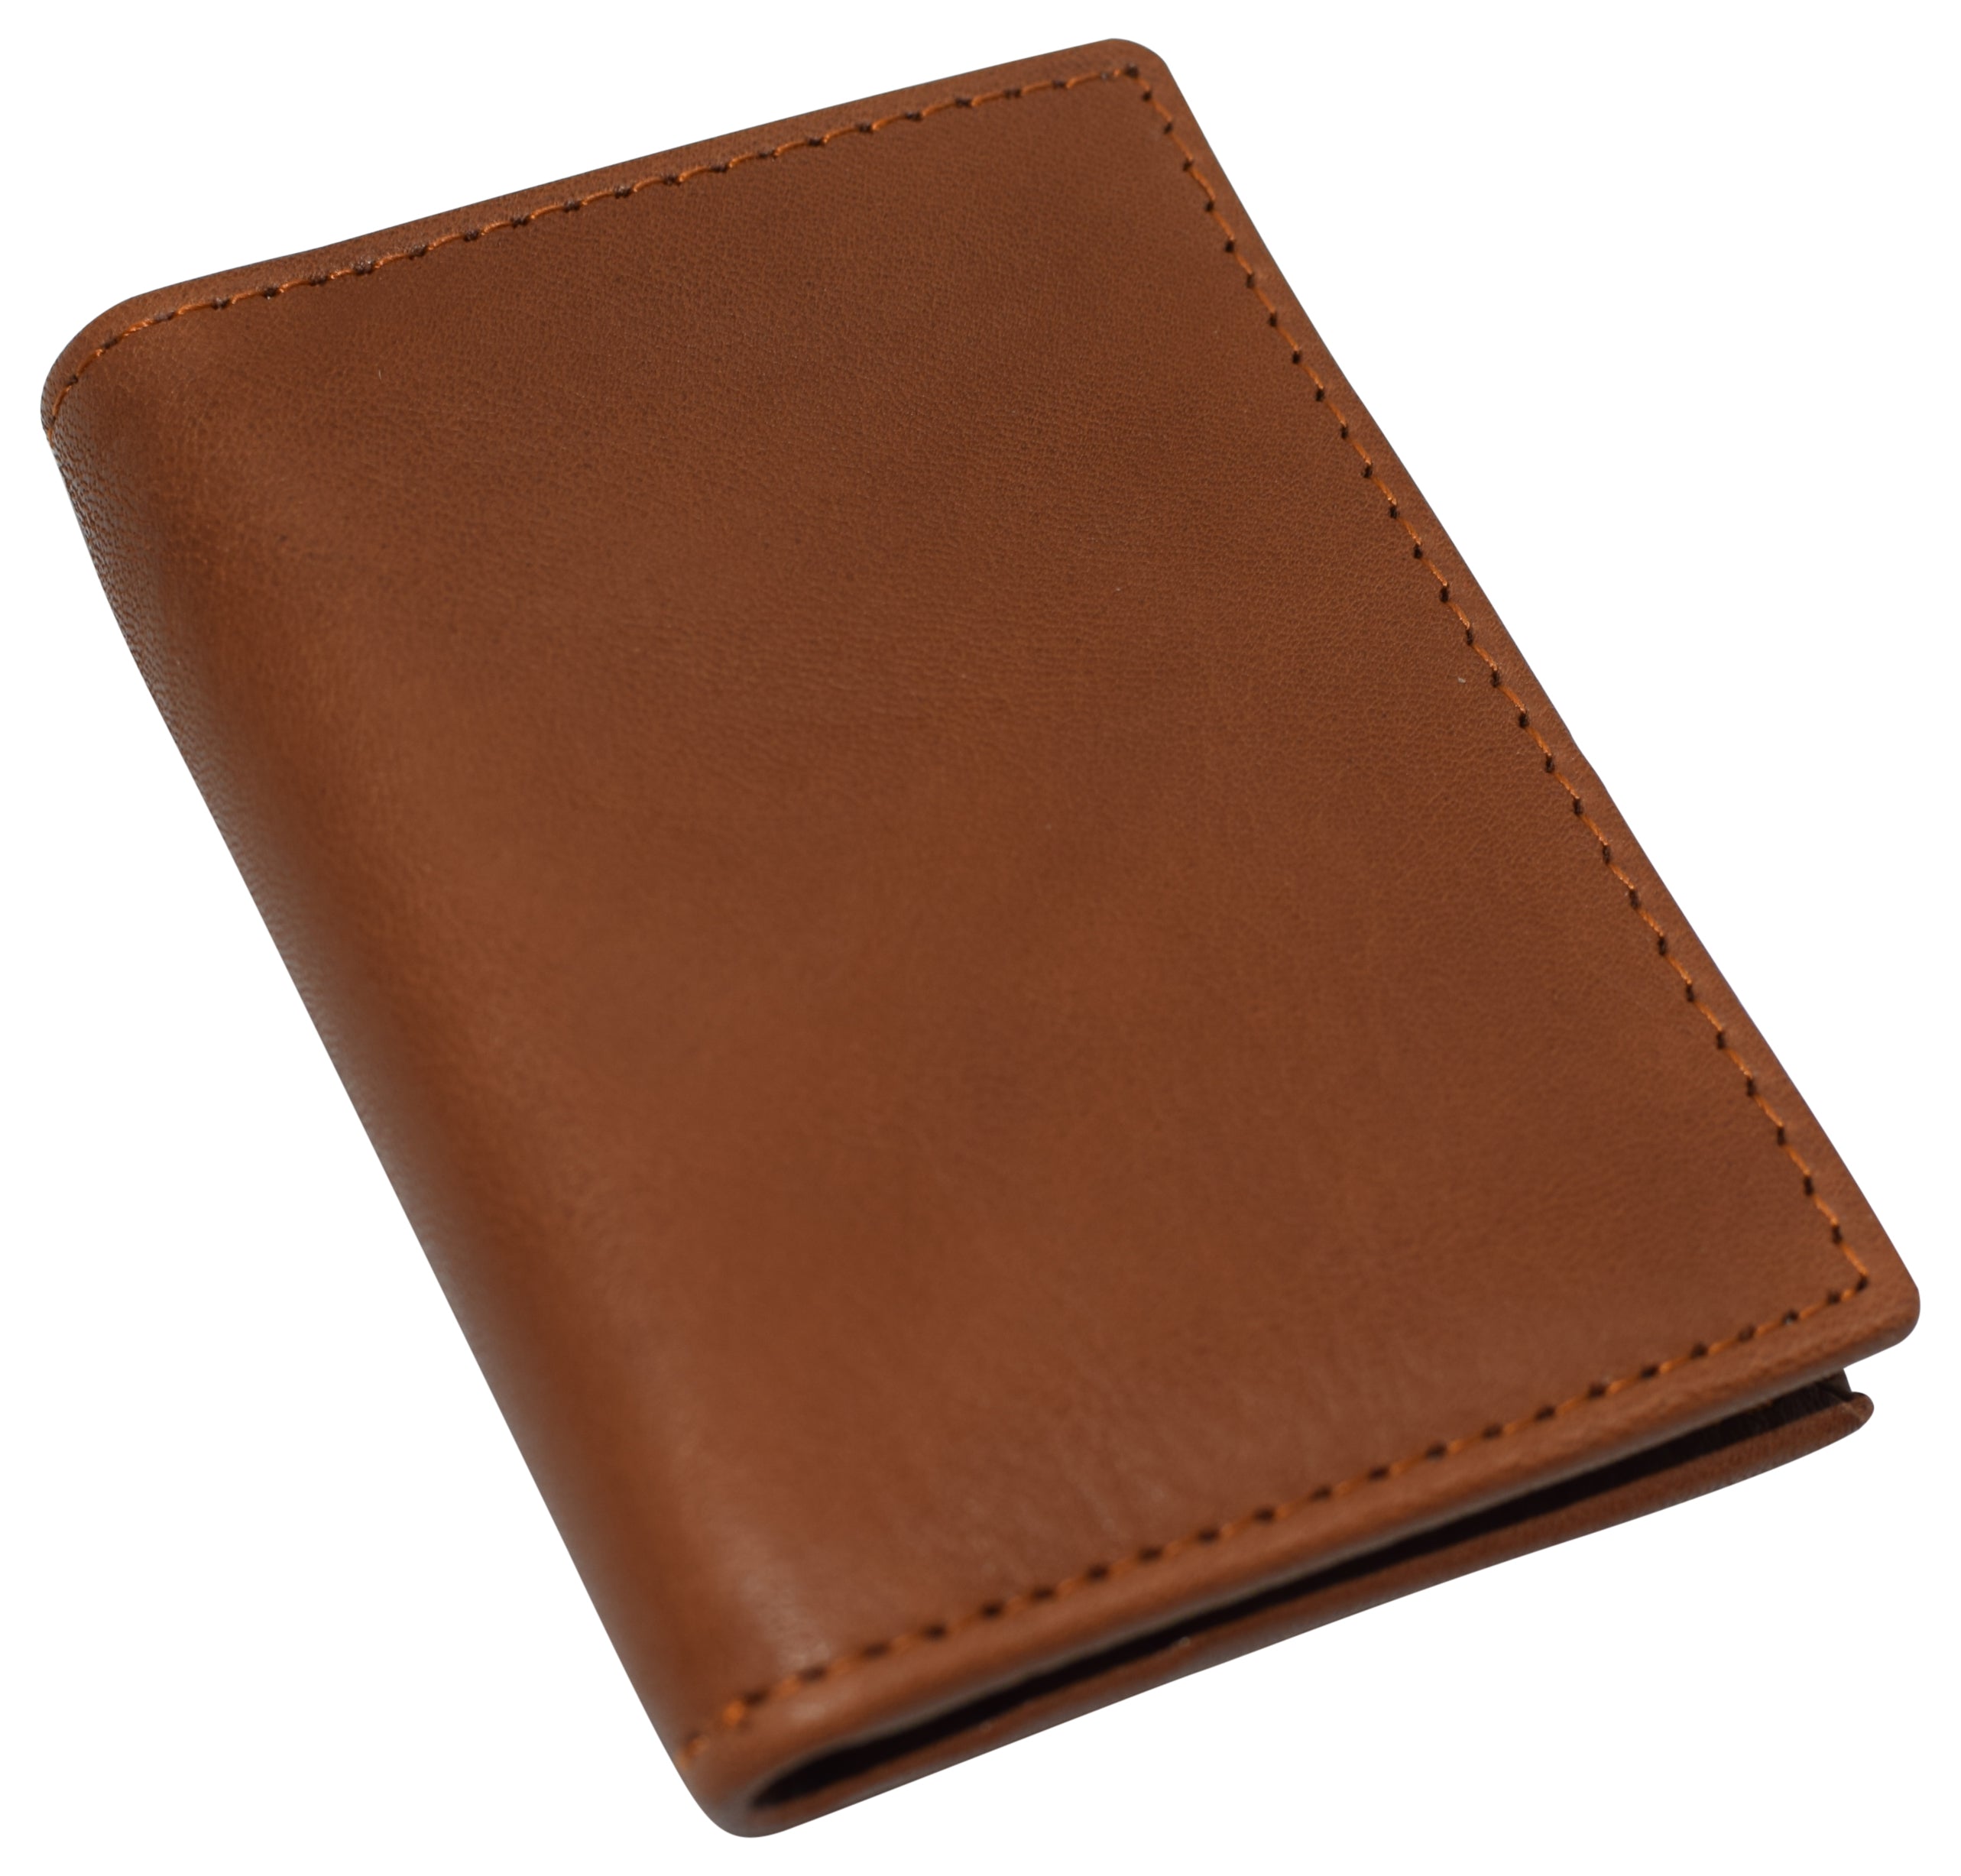 Slim Minimalist Wallet for Men Women, Mini Thin Leather Bifold, Front Pocket Credit Card Holder,RFID Blocking, Including Gift Box(Black/Red)